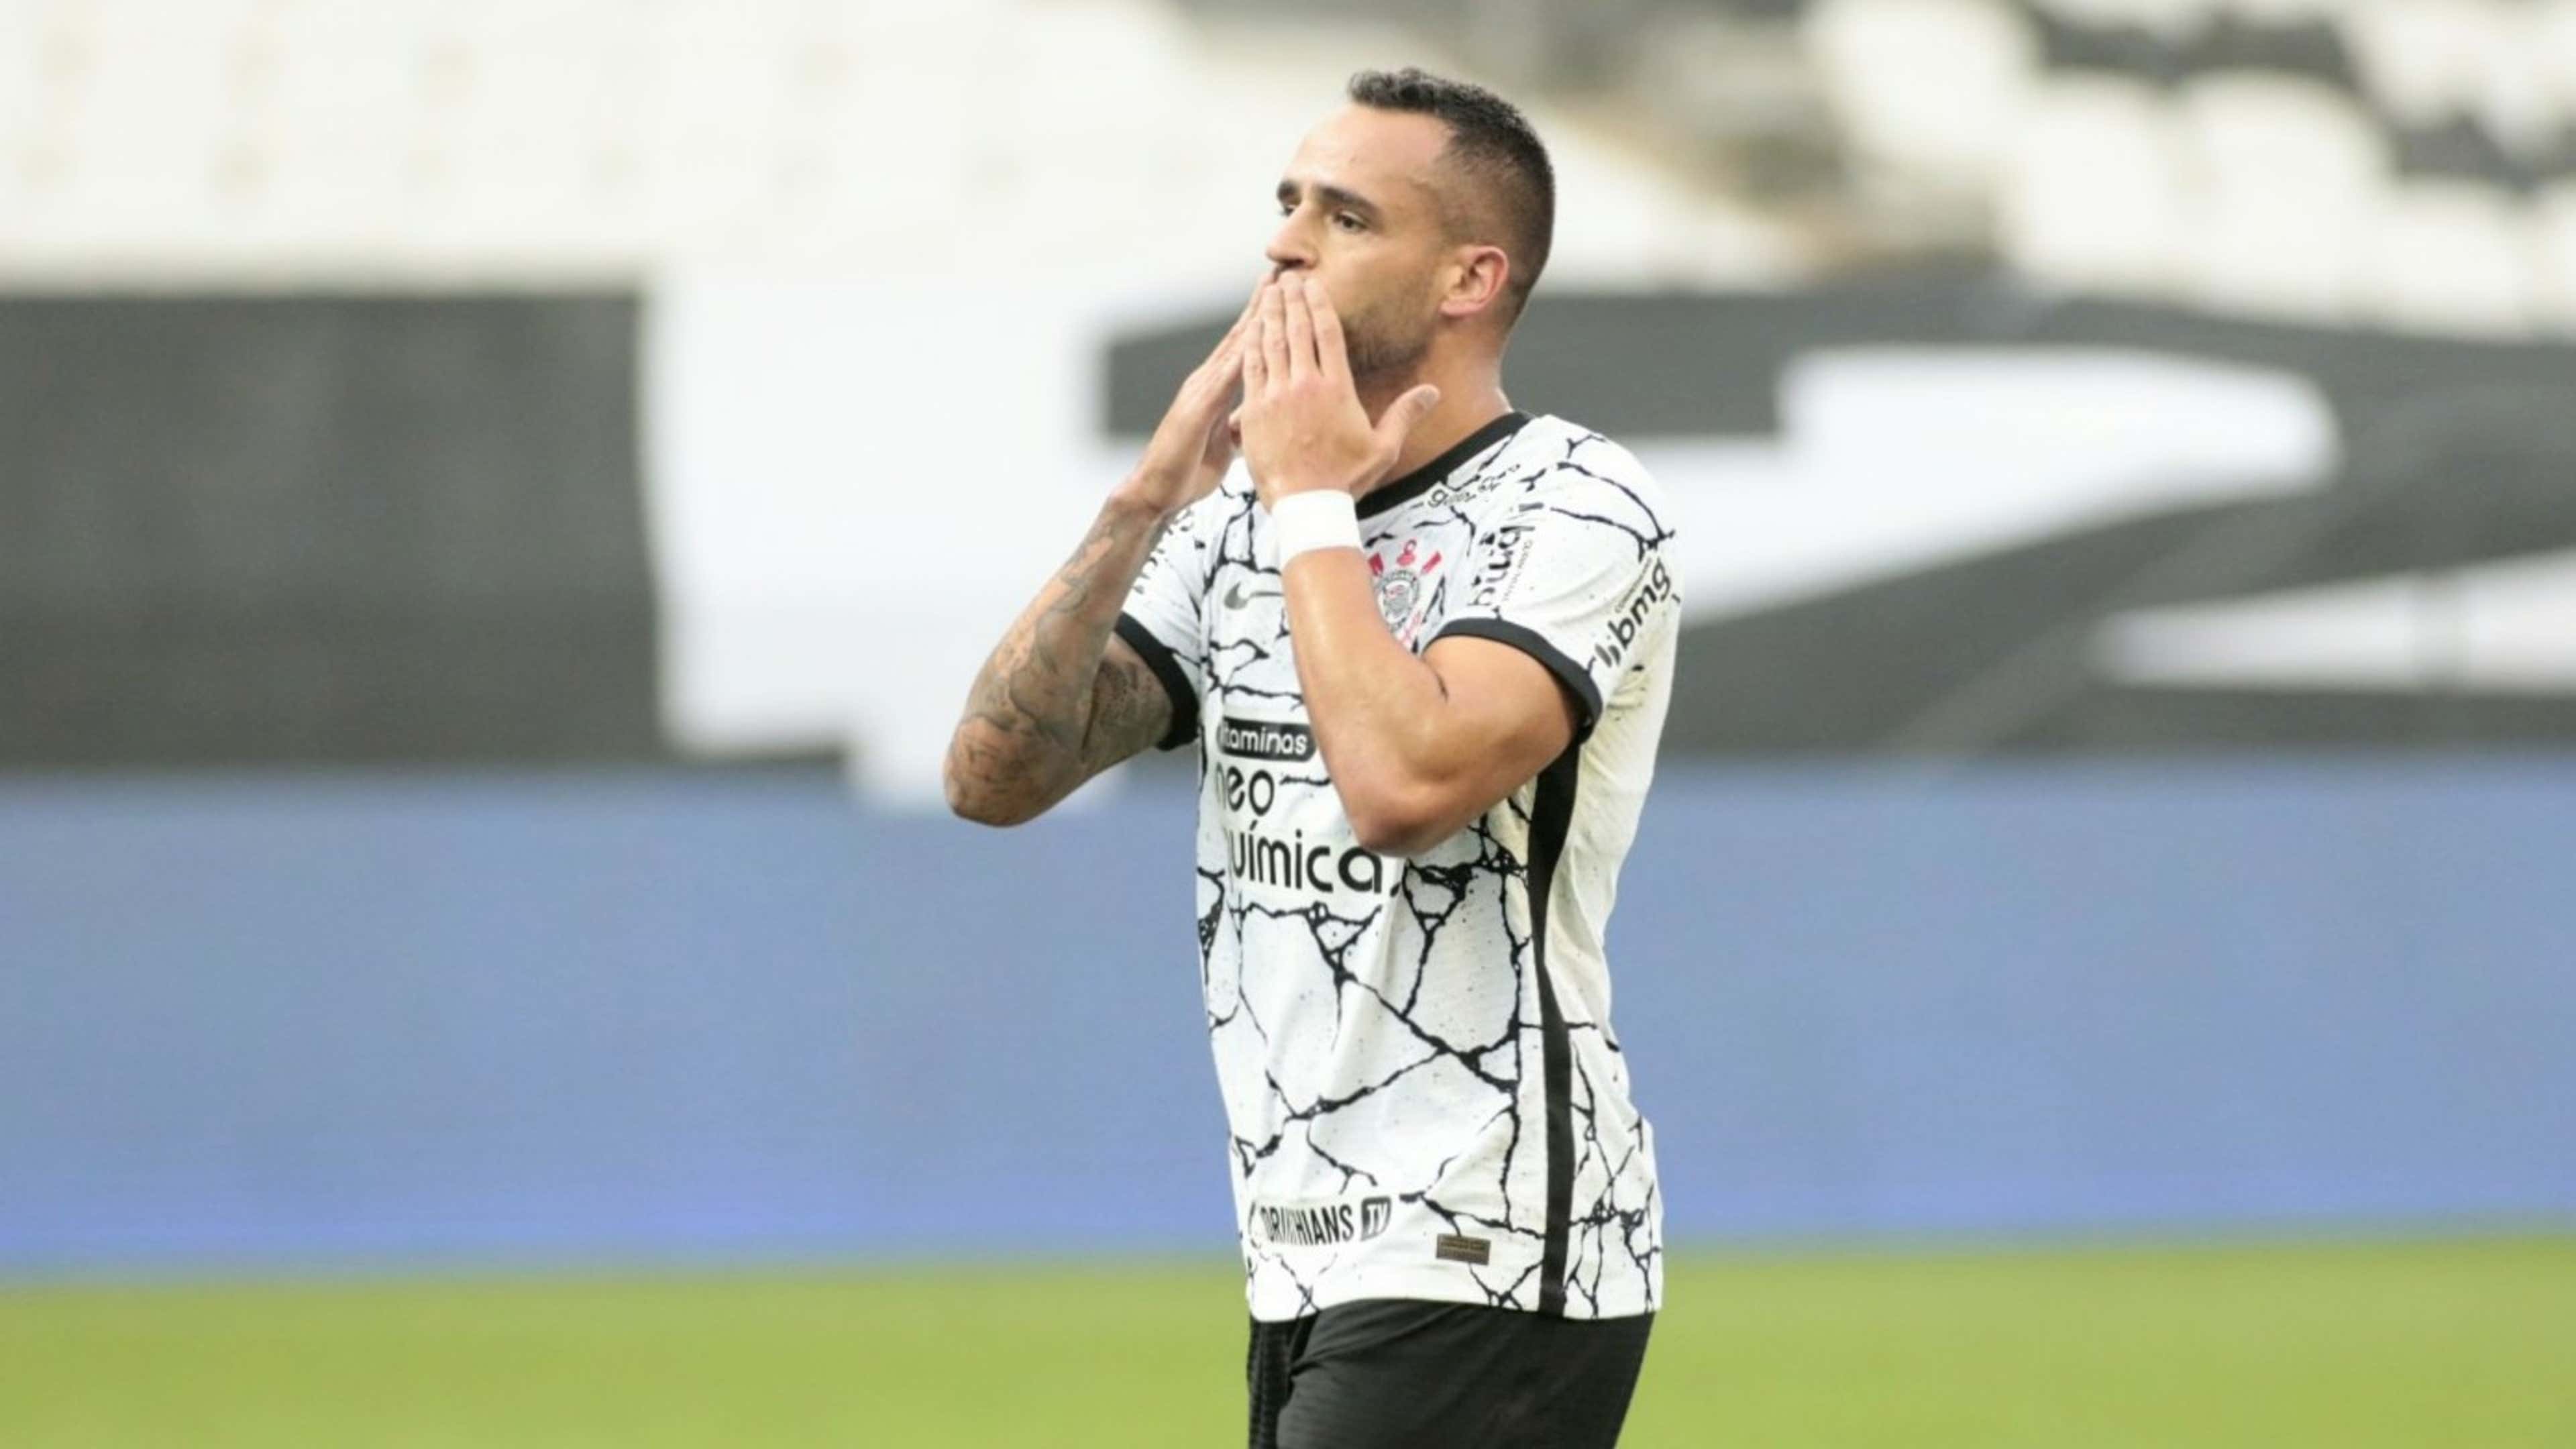 Corinthians vai enfrentar equipe que disputa Champions League